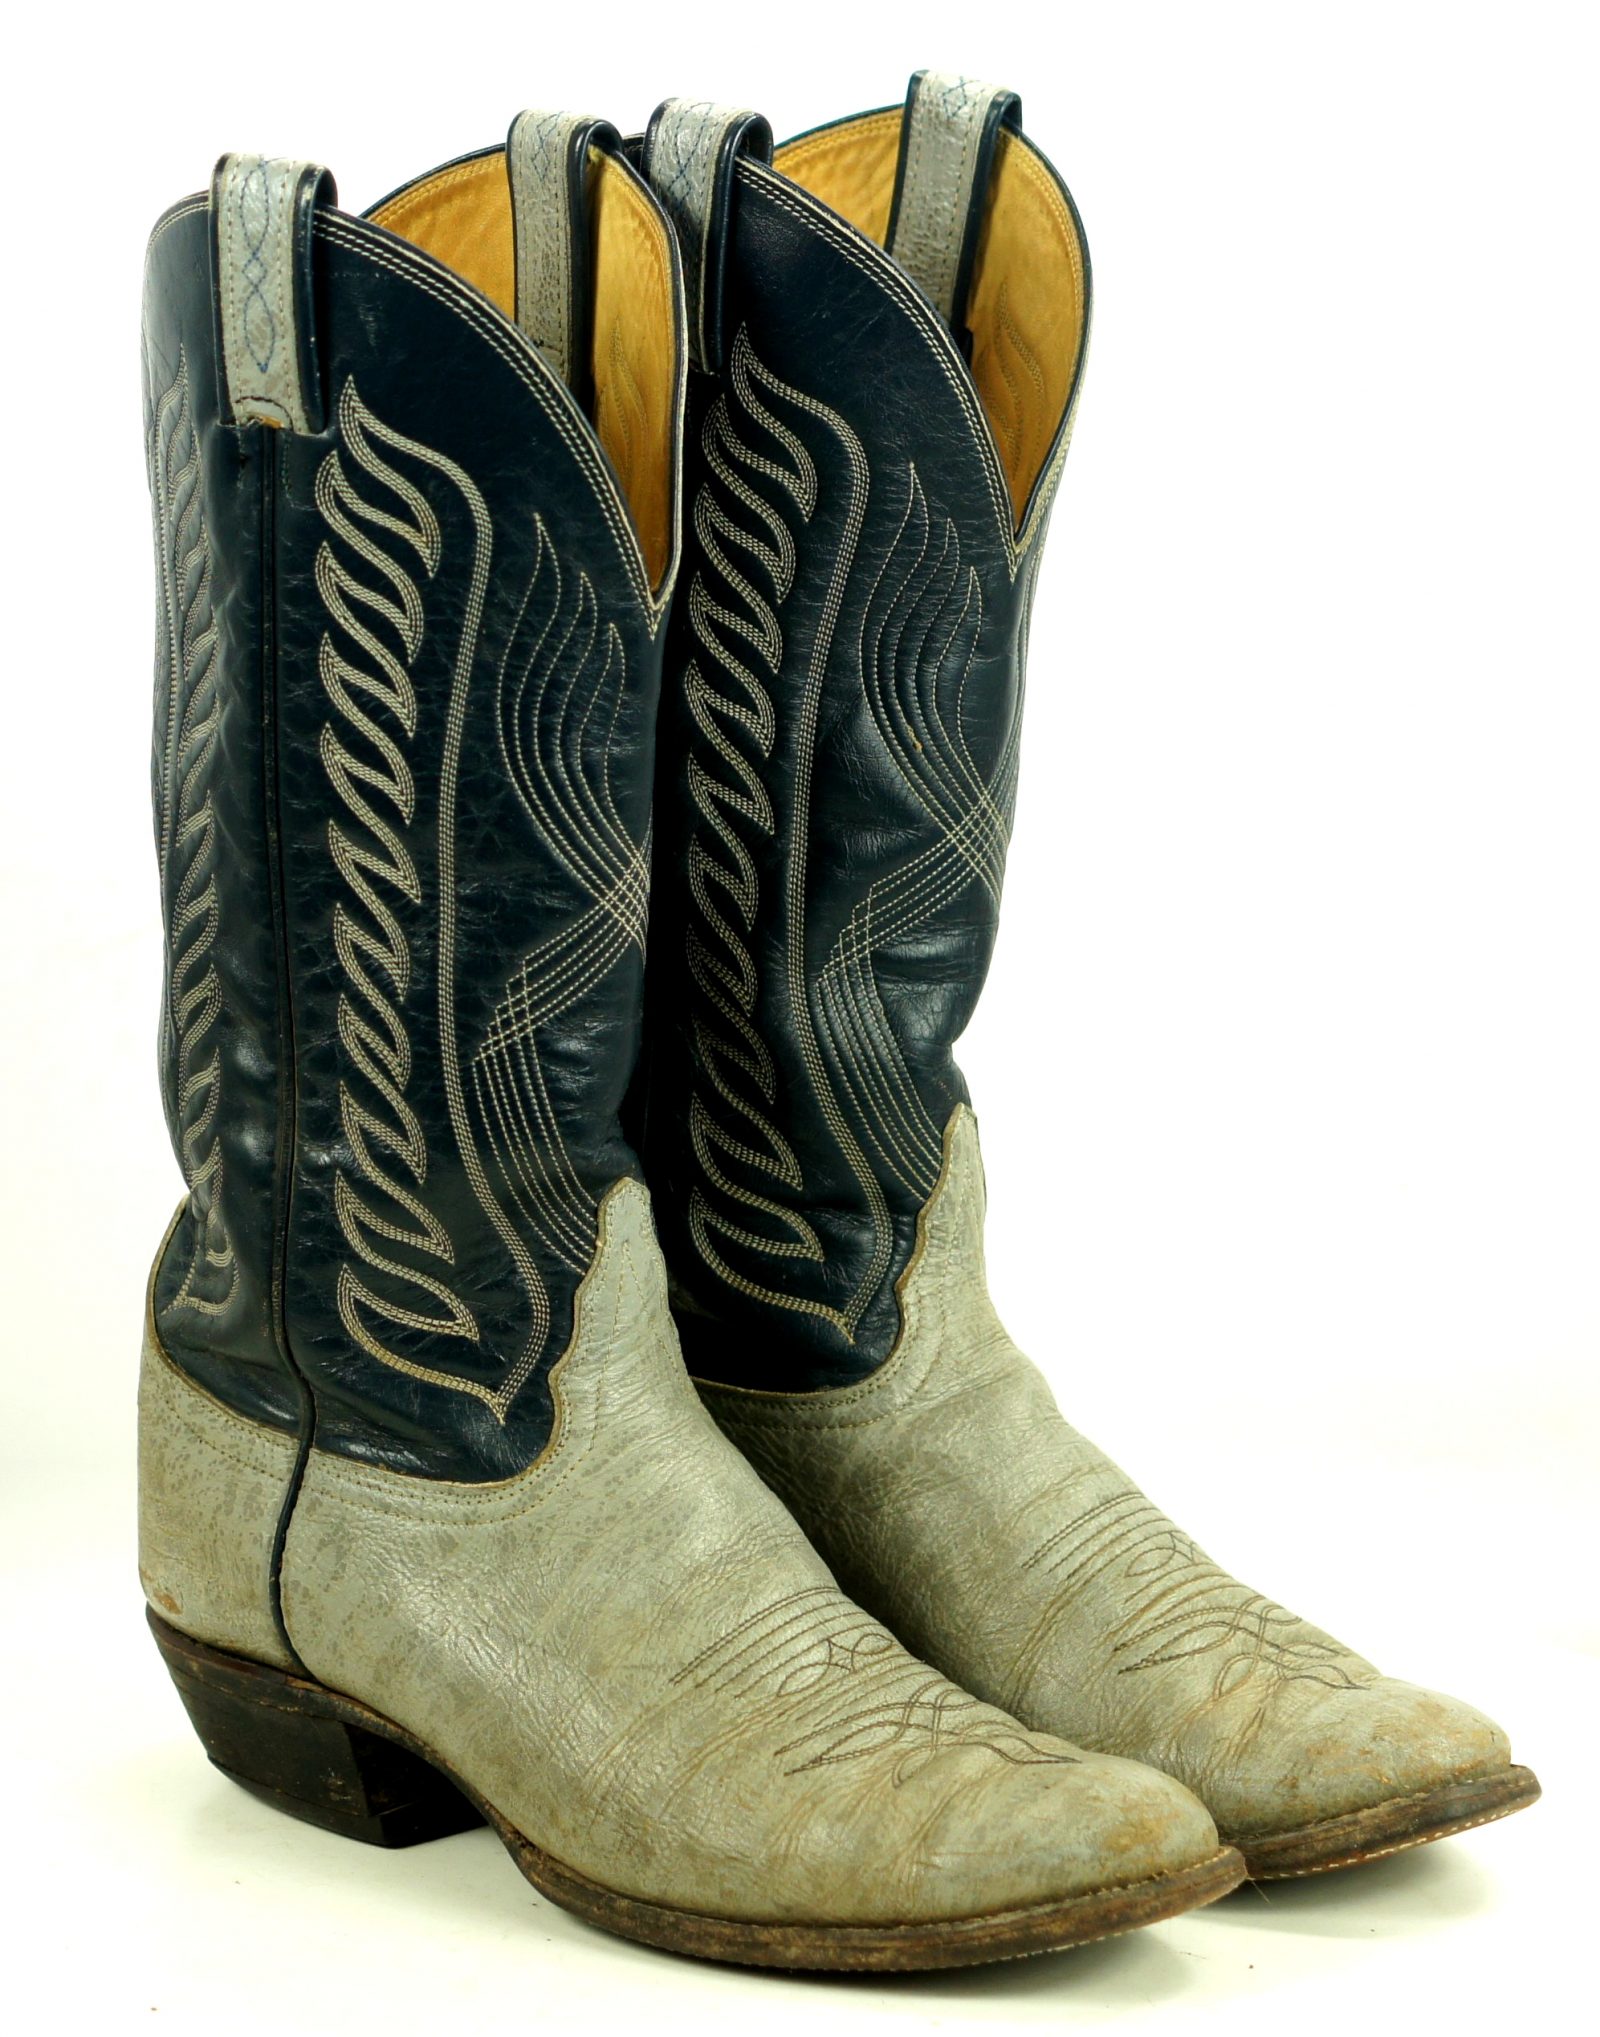 Tony Lama Gray Navy Leather Cowboy Boots Vintage Black Label US Made Men